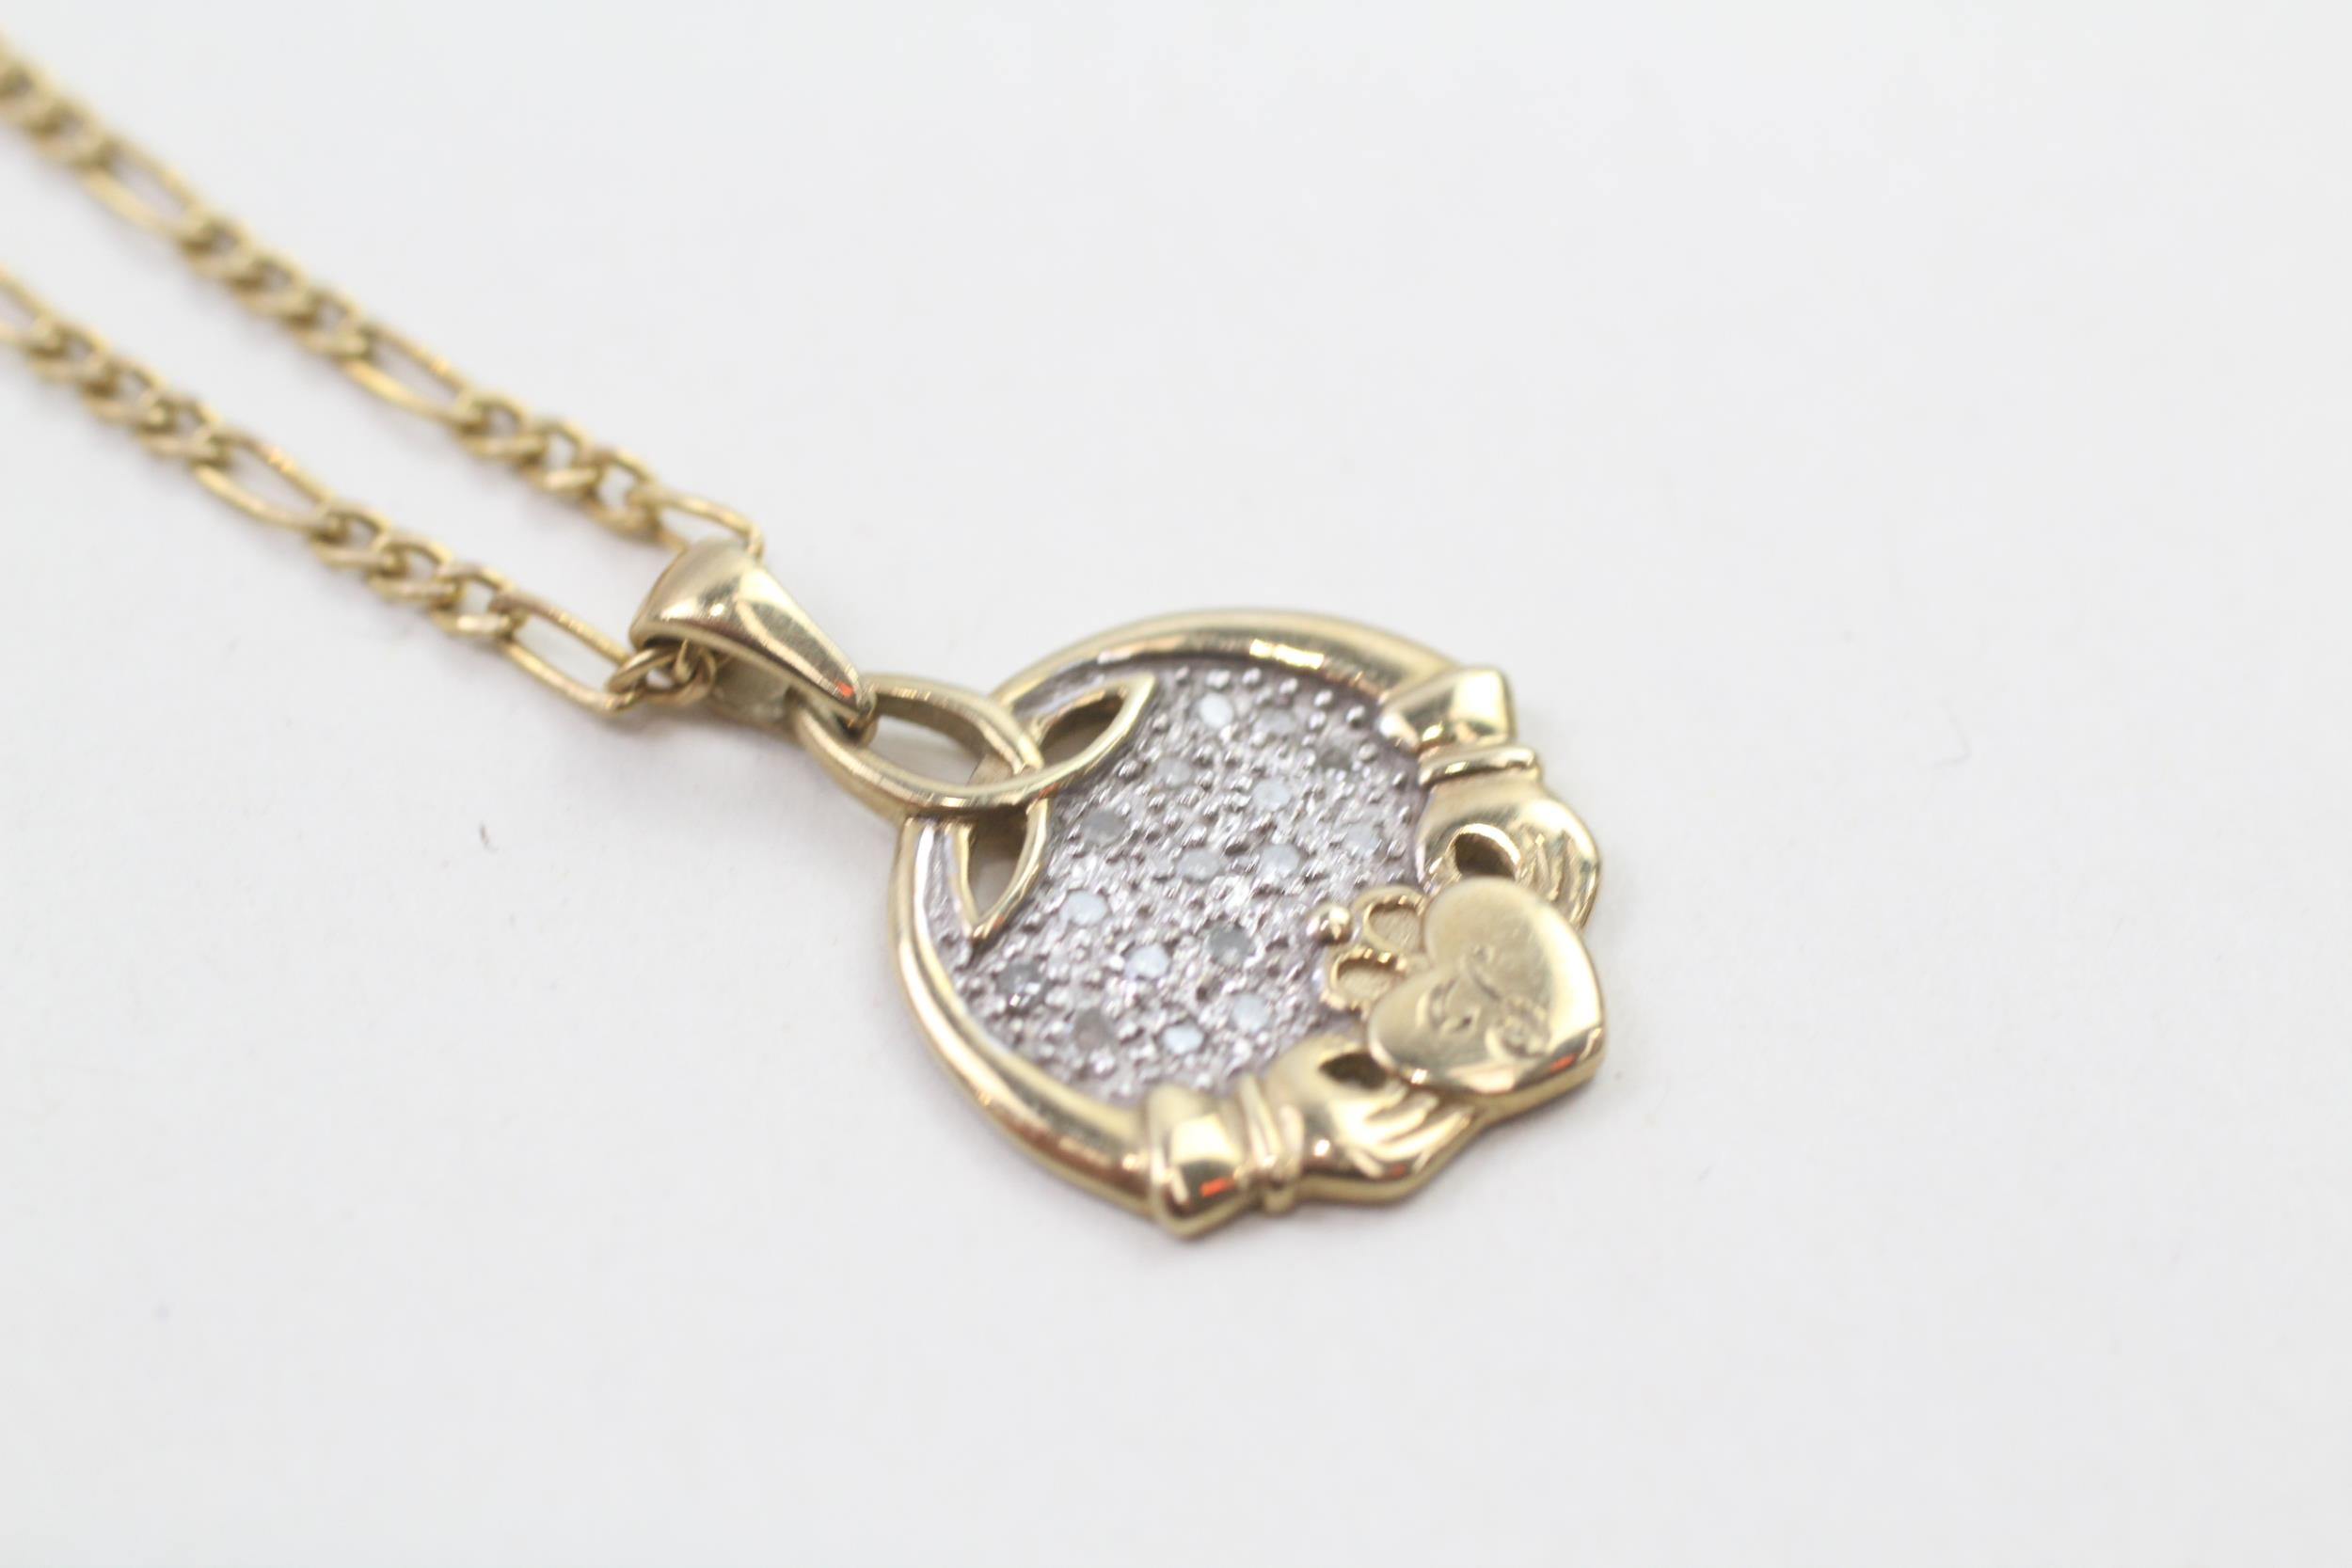 9ct gold diamond irish claddah pendant necklace (3.2g) - Image 3 of 4